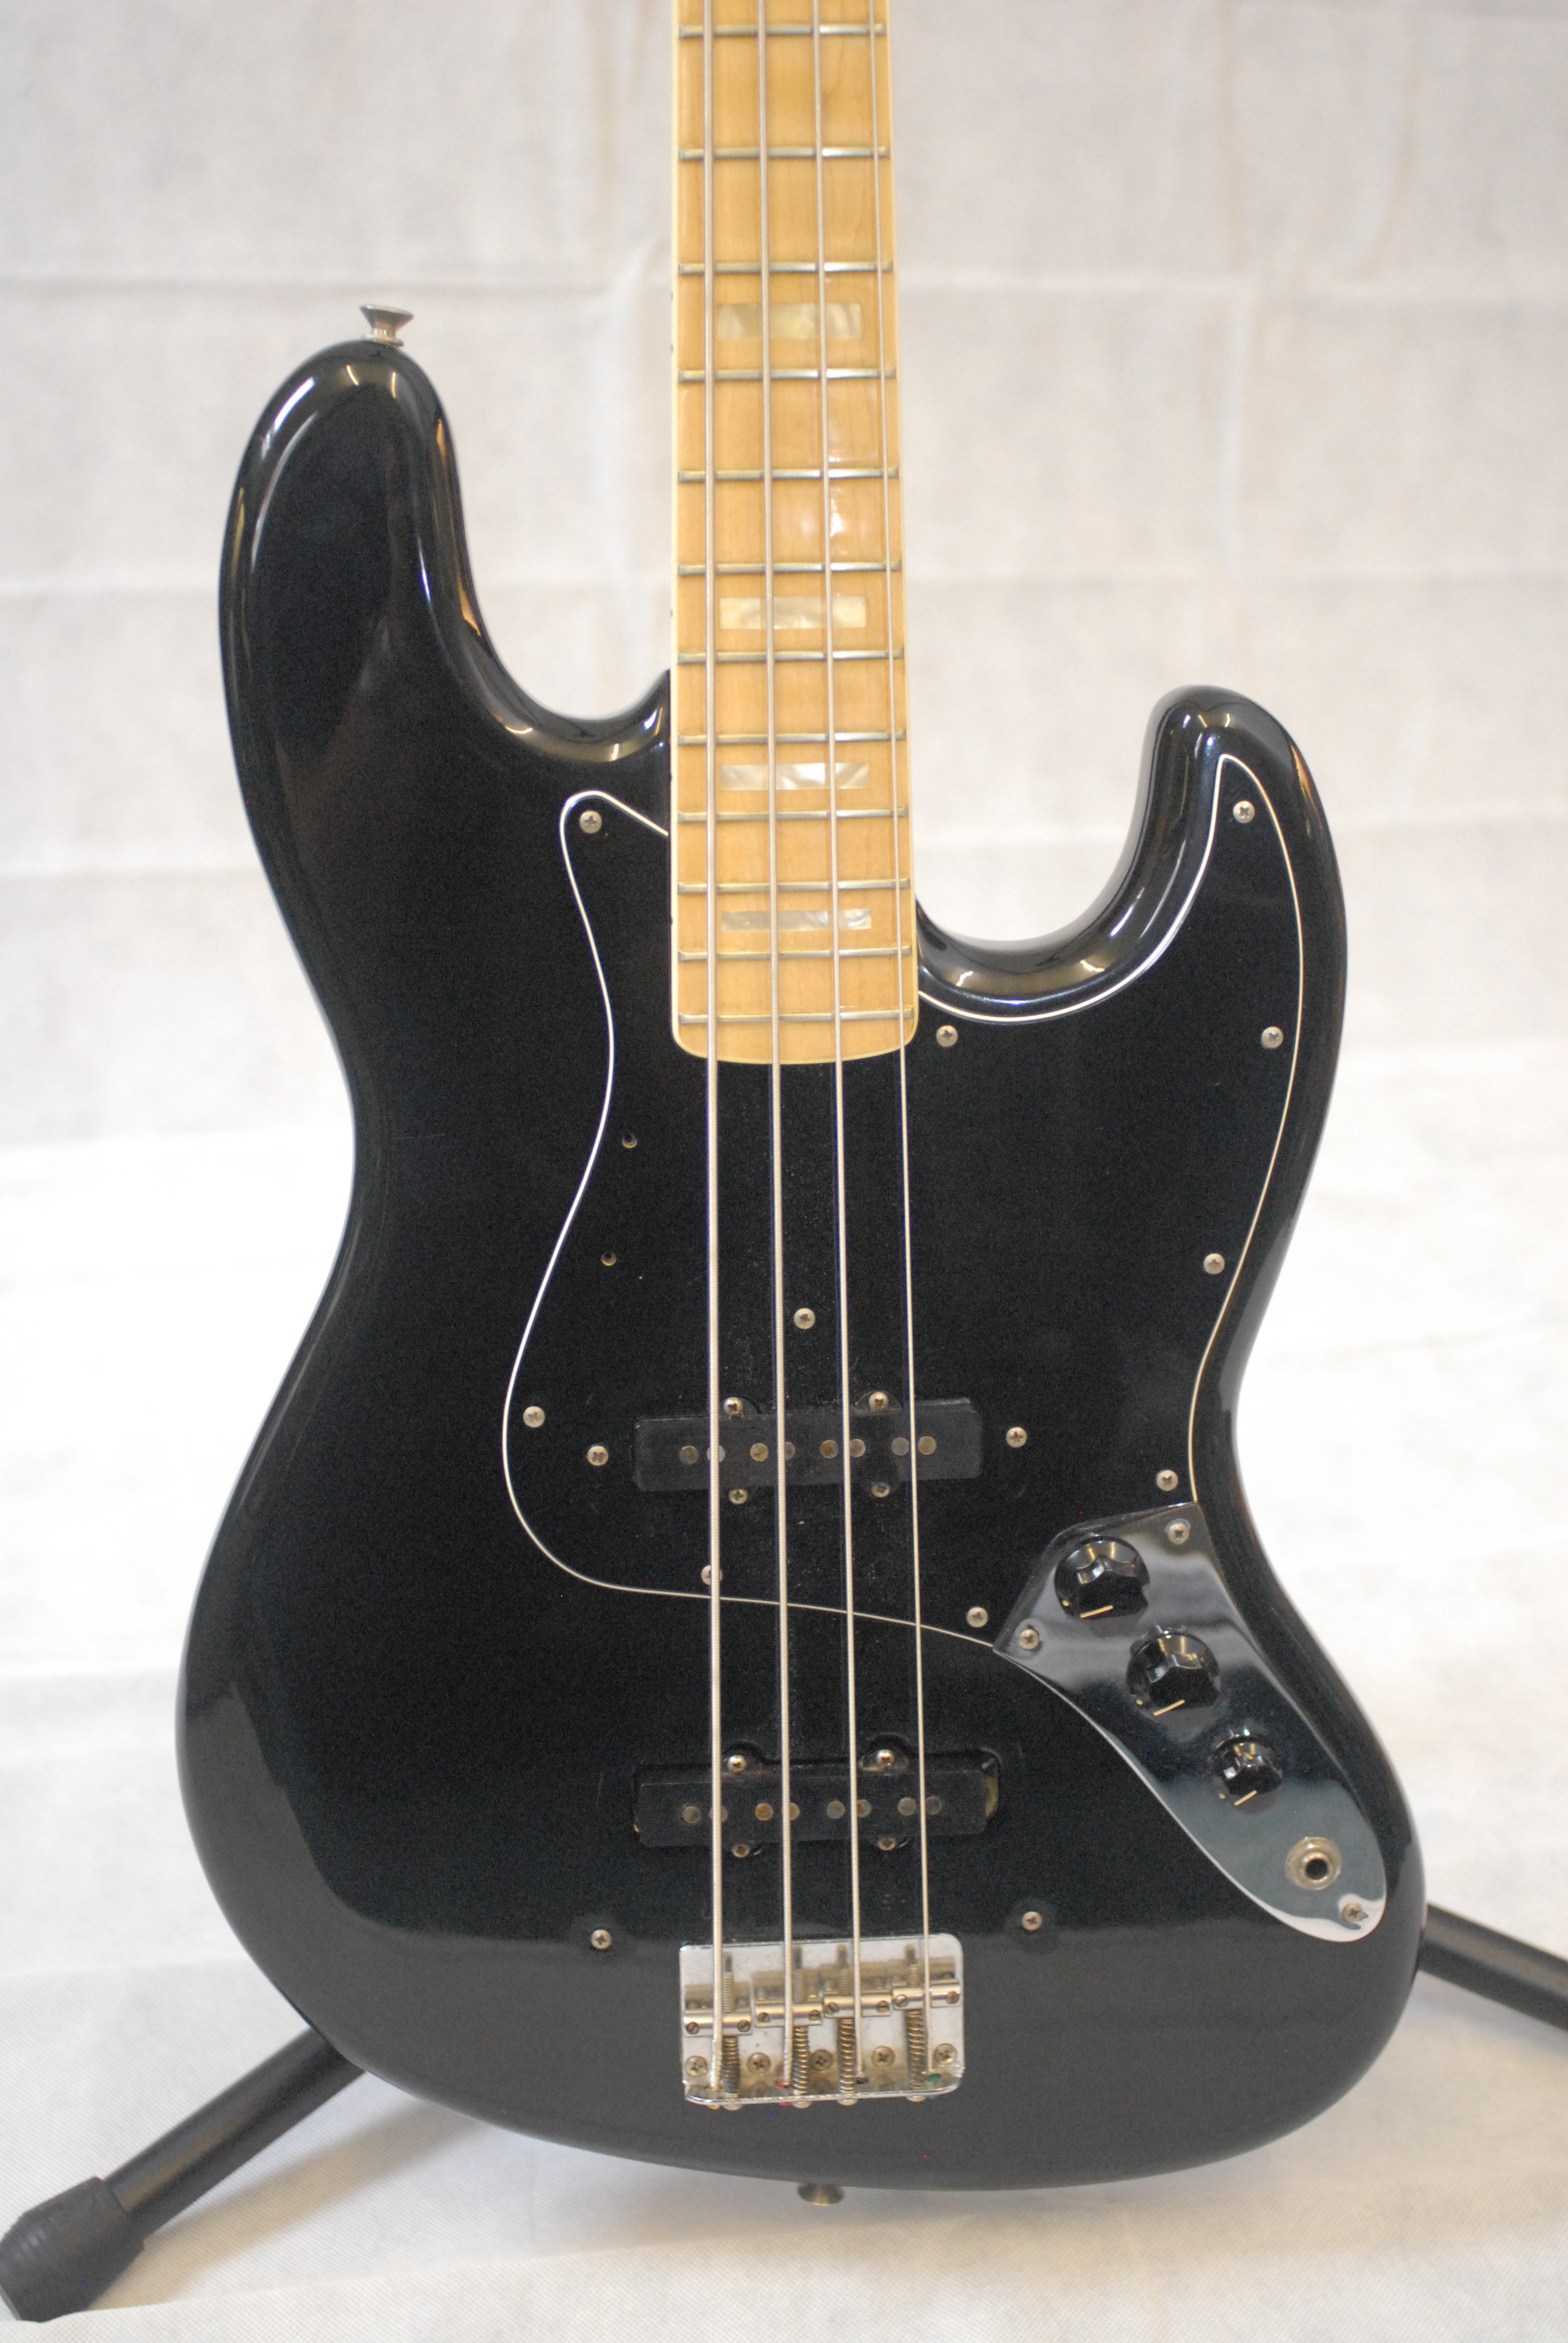 1977 Fender Jazz Bass Usa Black With Black Guard Maple Neck Nicknamed